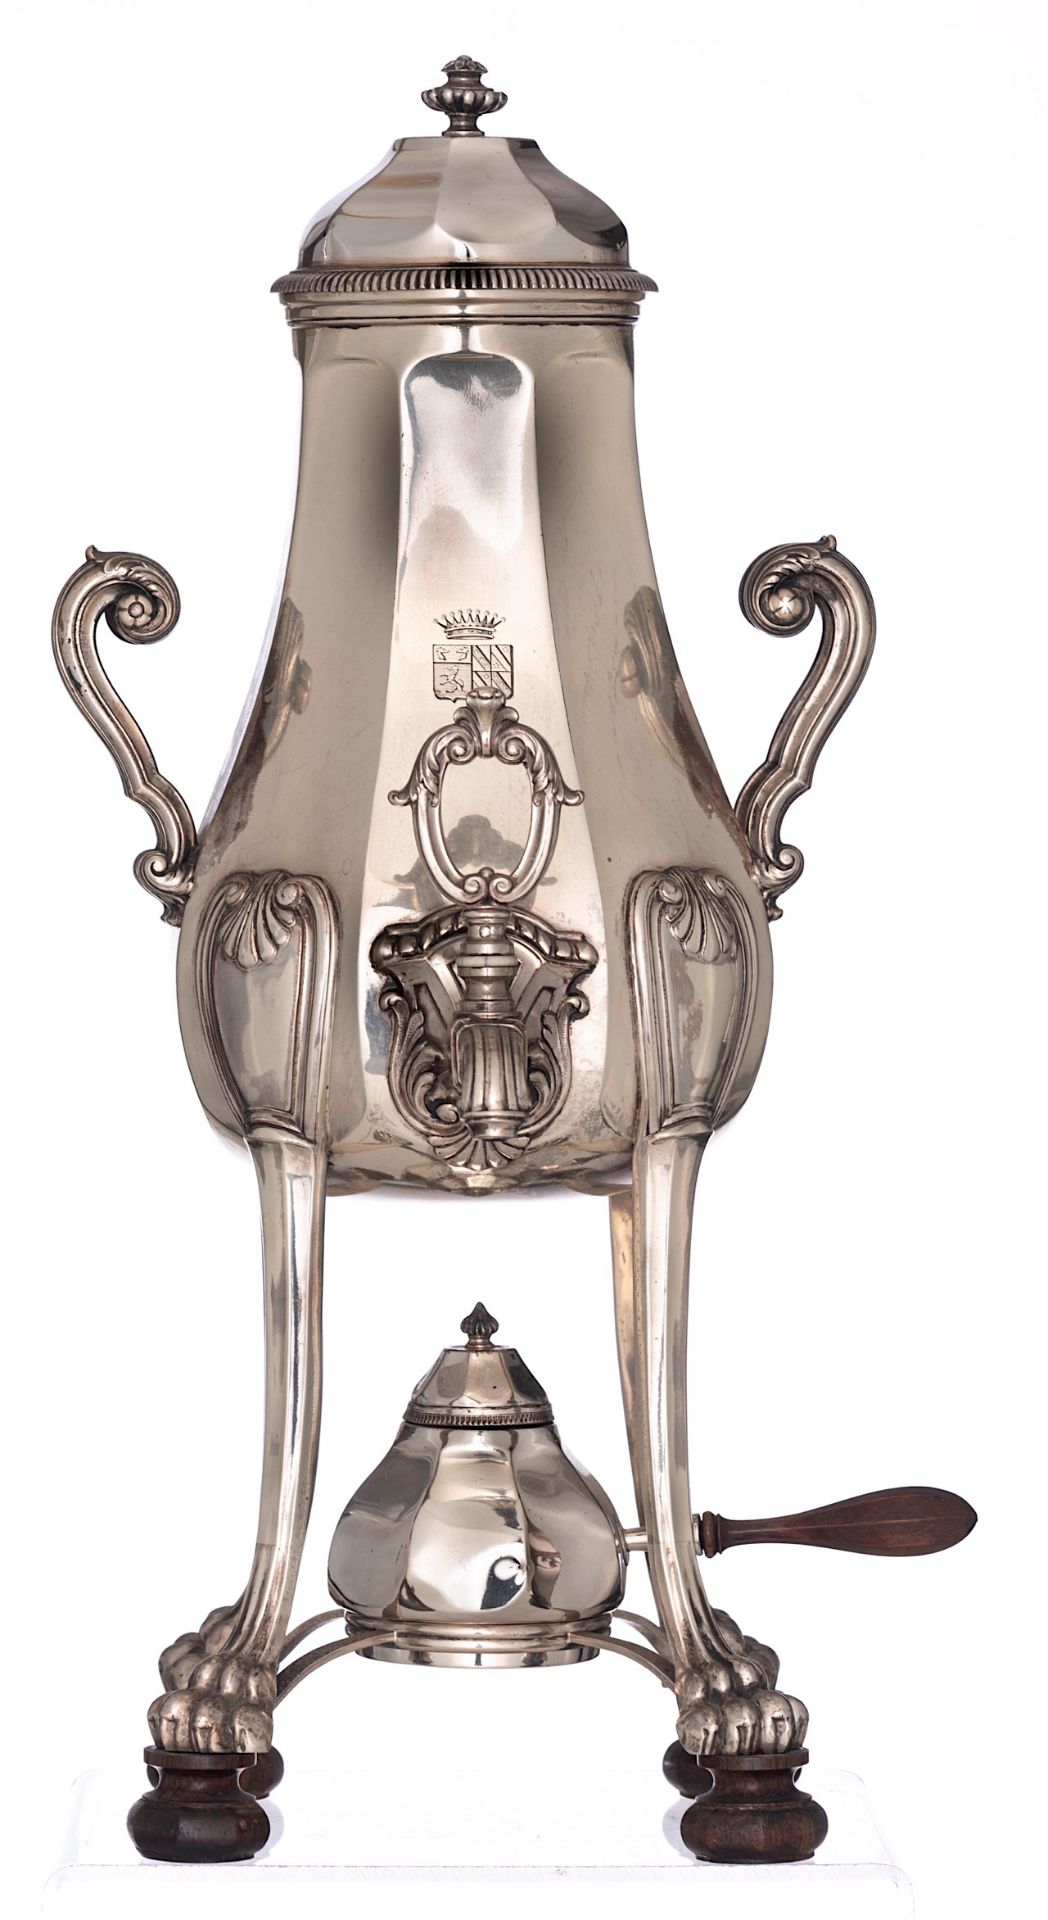 A French - Paris 19thC Regence silver tea urn, maker's mark 'Tetard - Paris', H 42,6 cm - weight c. - Image 2 of 14